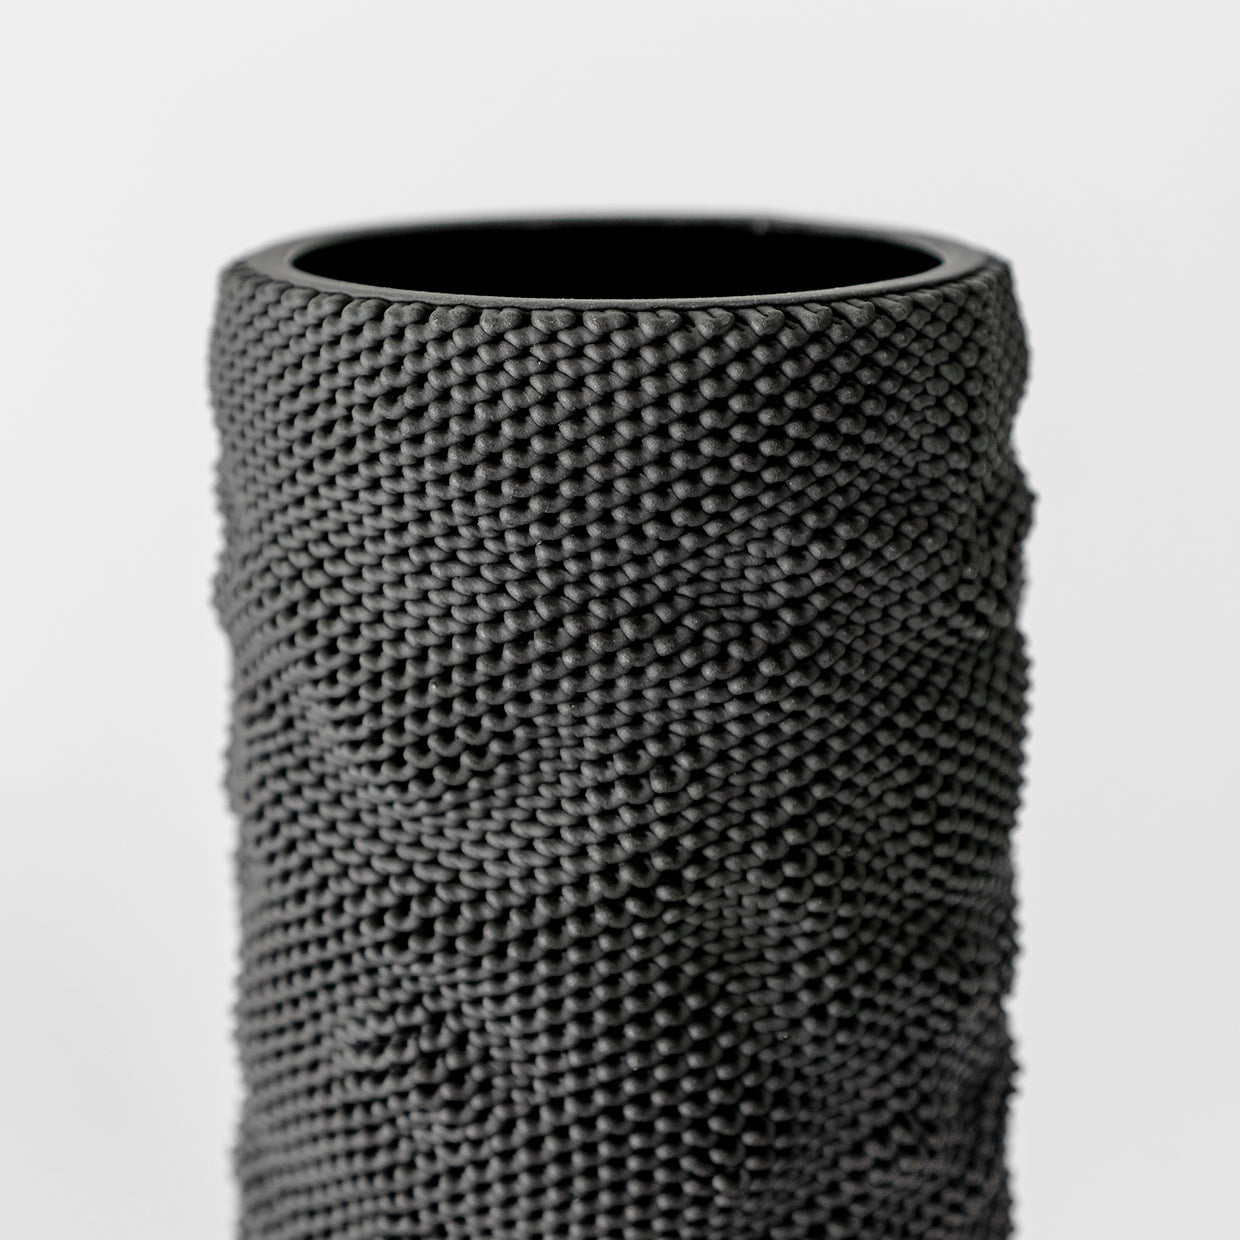 3d printed ceramic vase Python